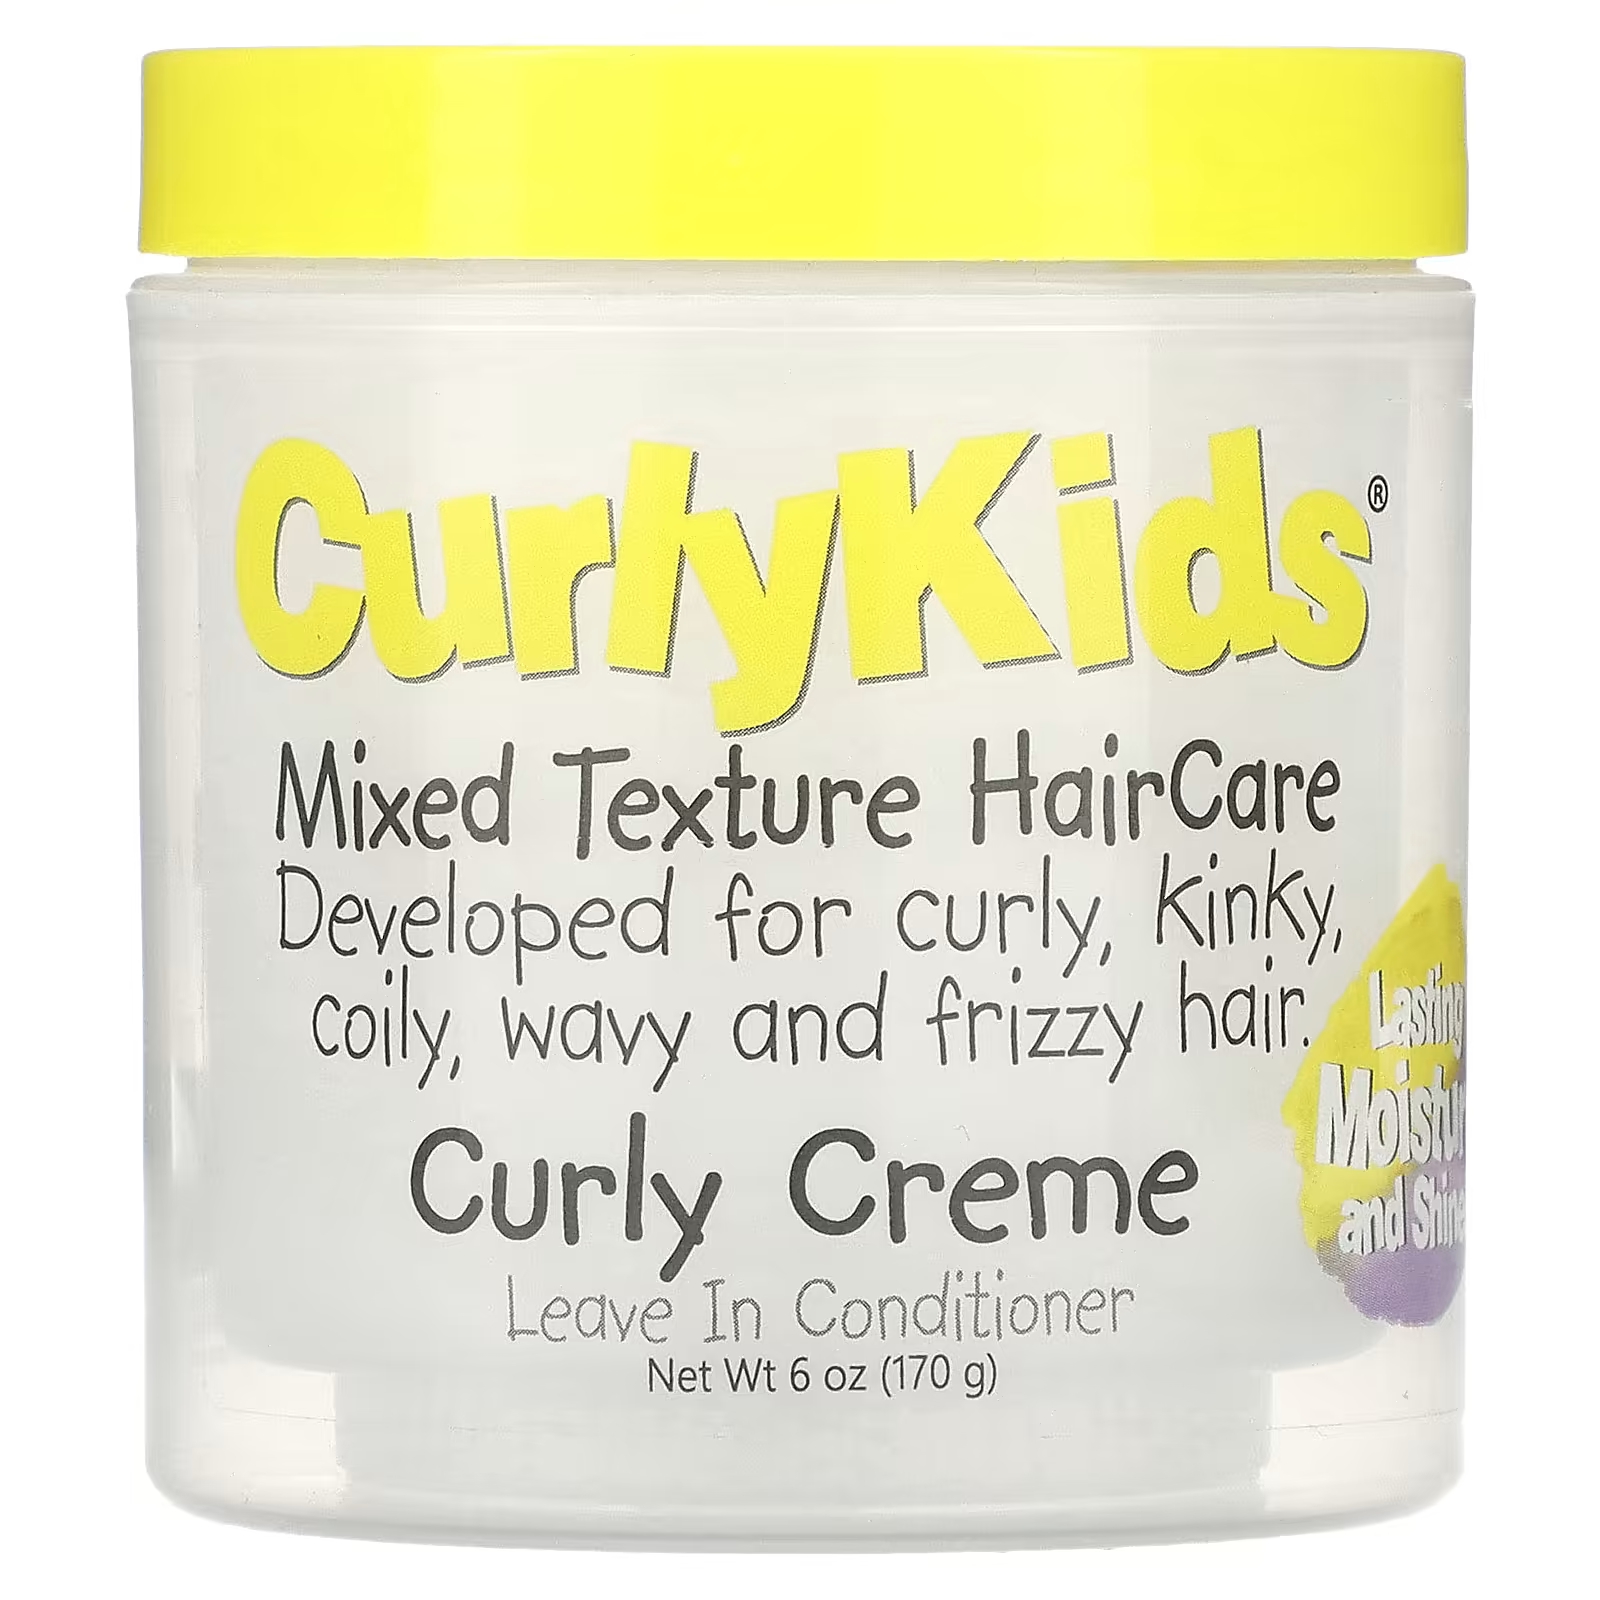 Кондиционер CurlyKids Curly Creme, 170 г средство для ухода за волосами curlykids со смешанной текстурой